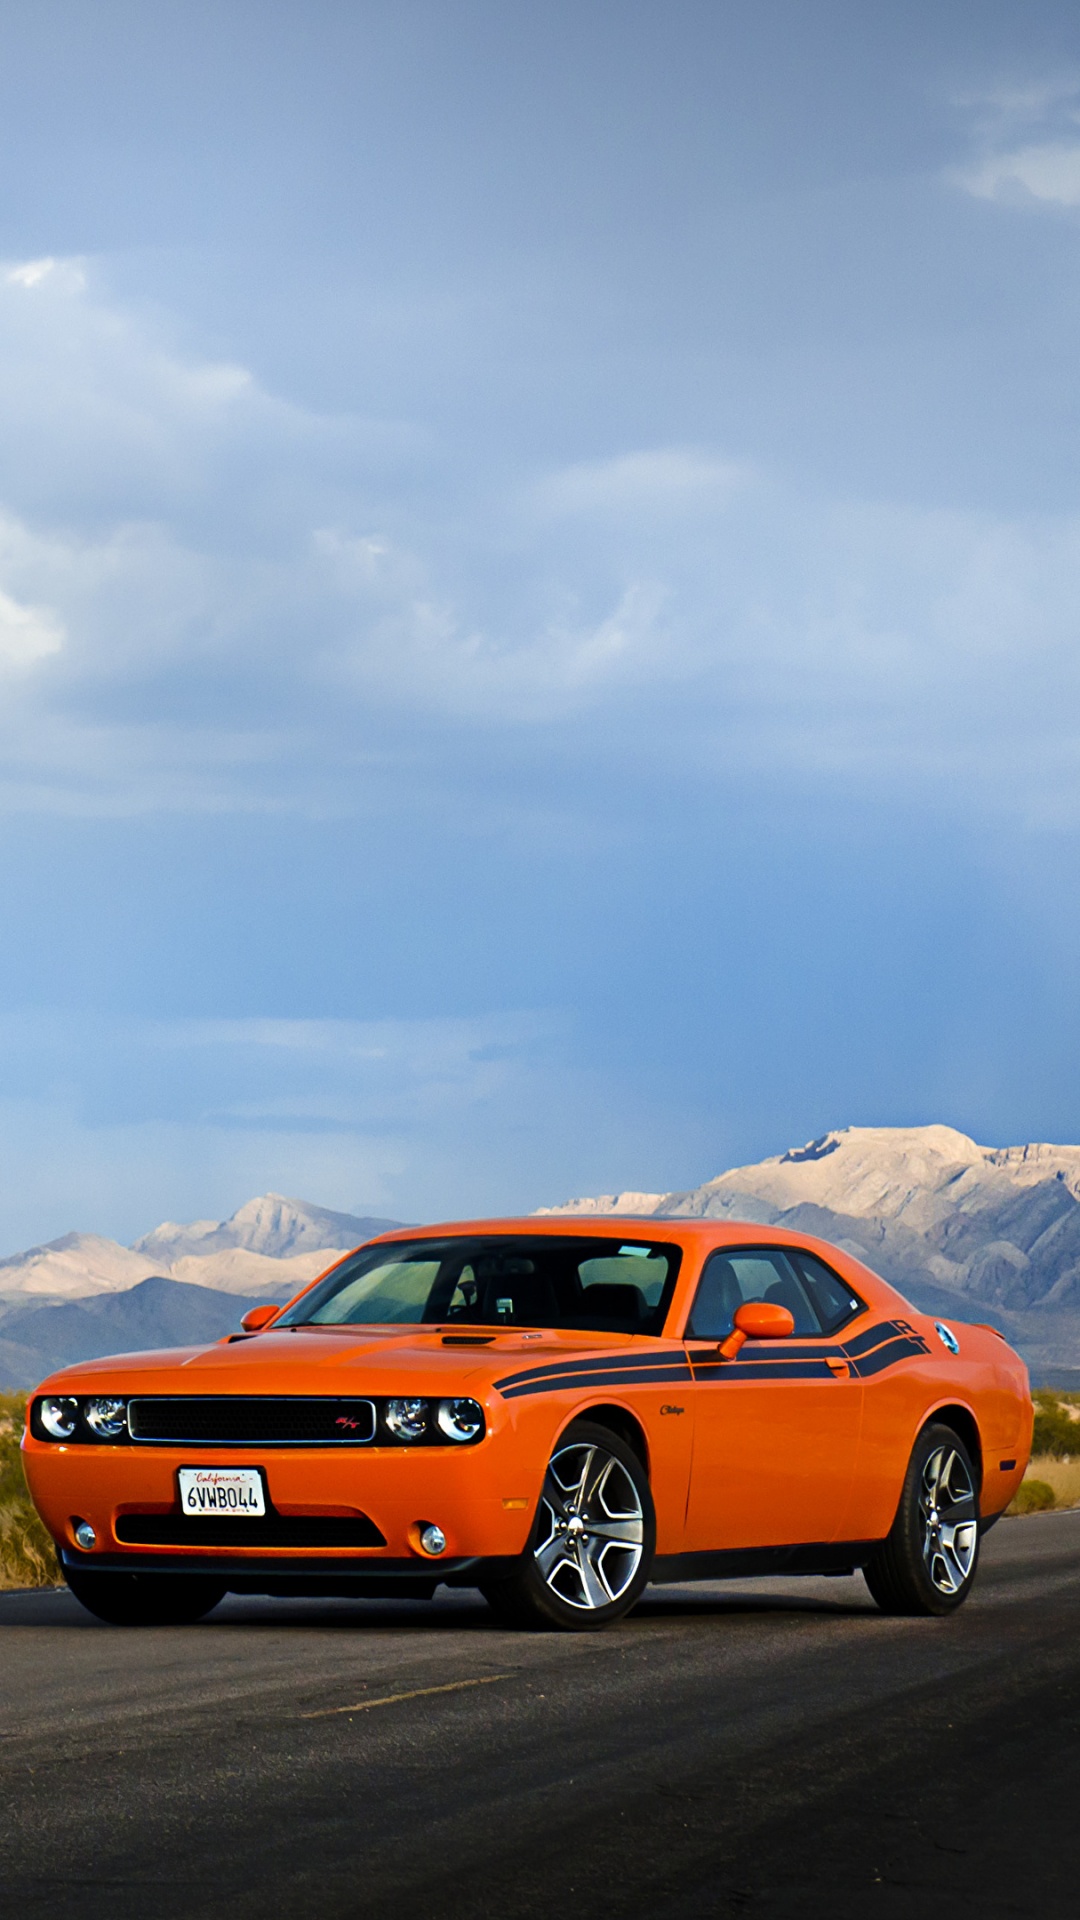 Orange Chevrolet Camaro on Road During Daytime. Wallpaper in 1080x1920 Resolution